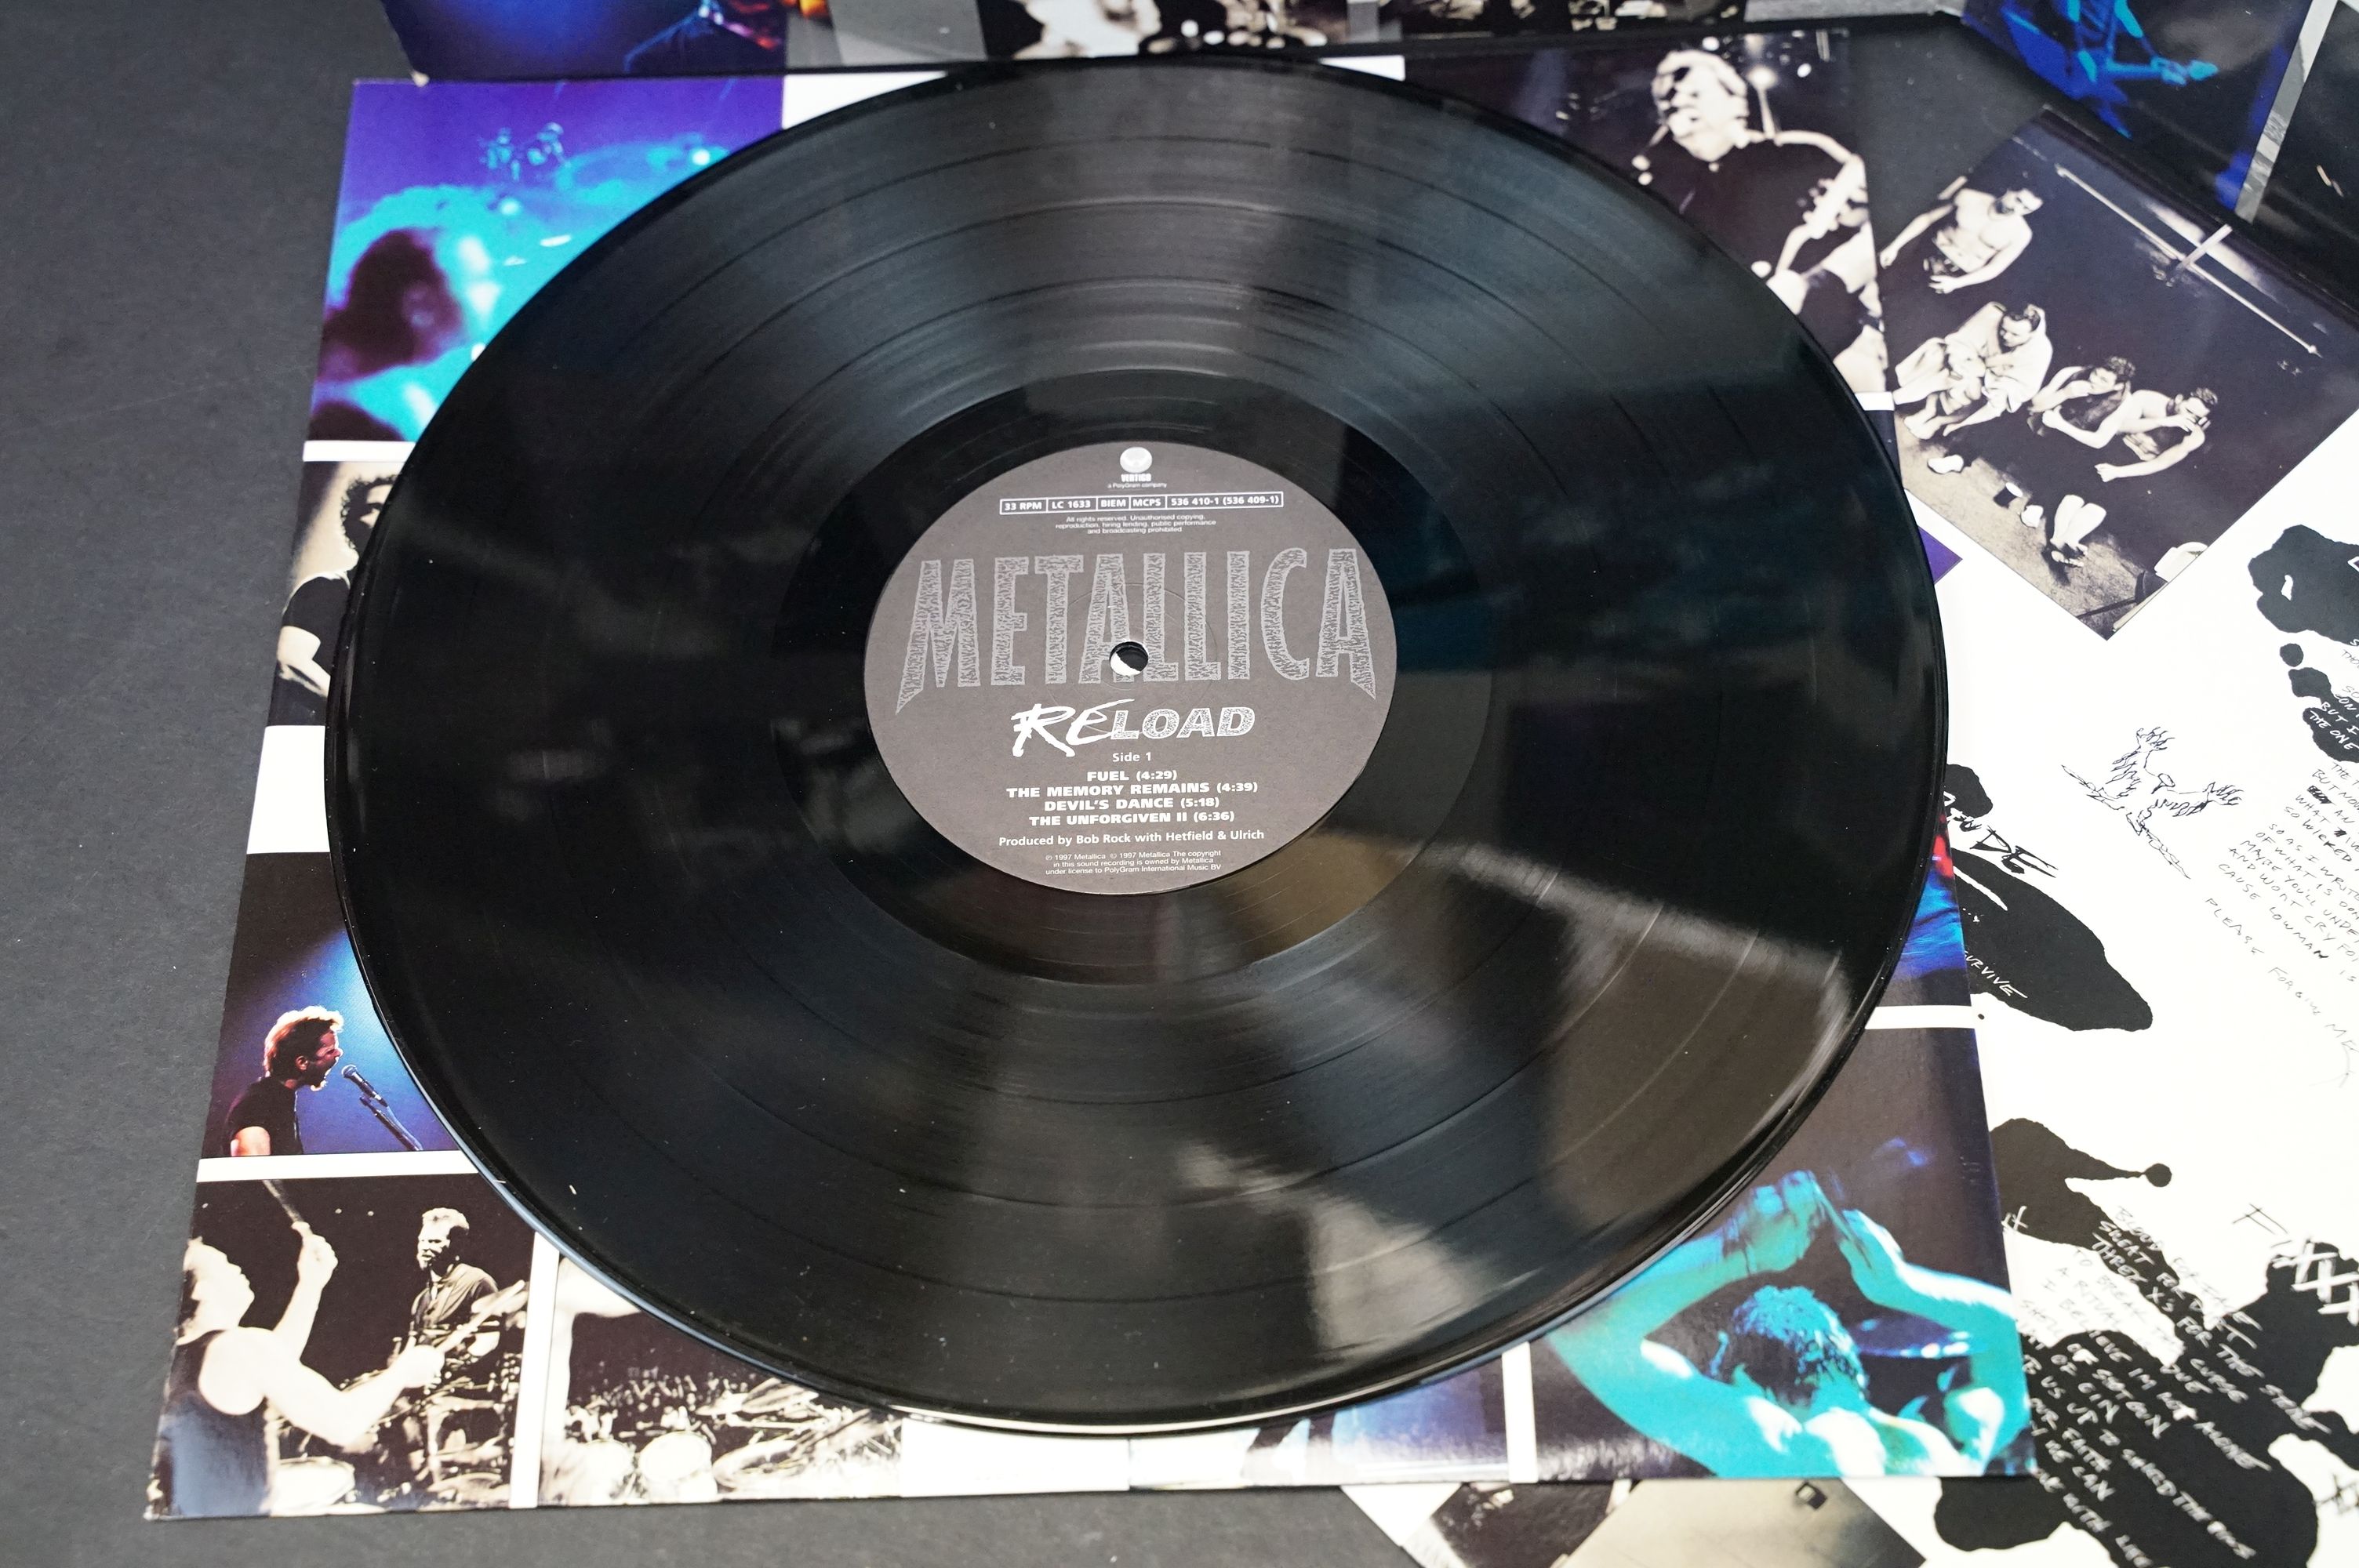 Vinyl - Metallica Reload 2LP on Vertigo 536 409-1. Sleeve Ex with original hype sticker, inners - Image 3 of 5